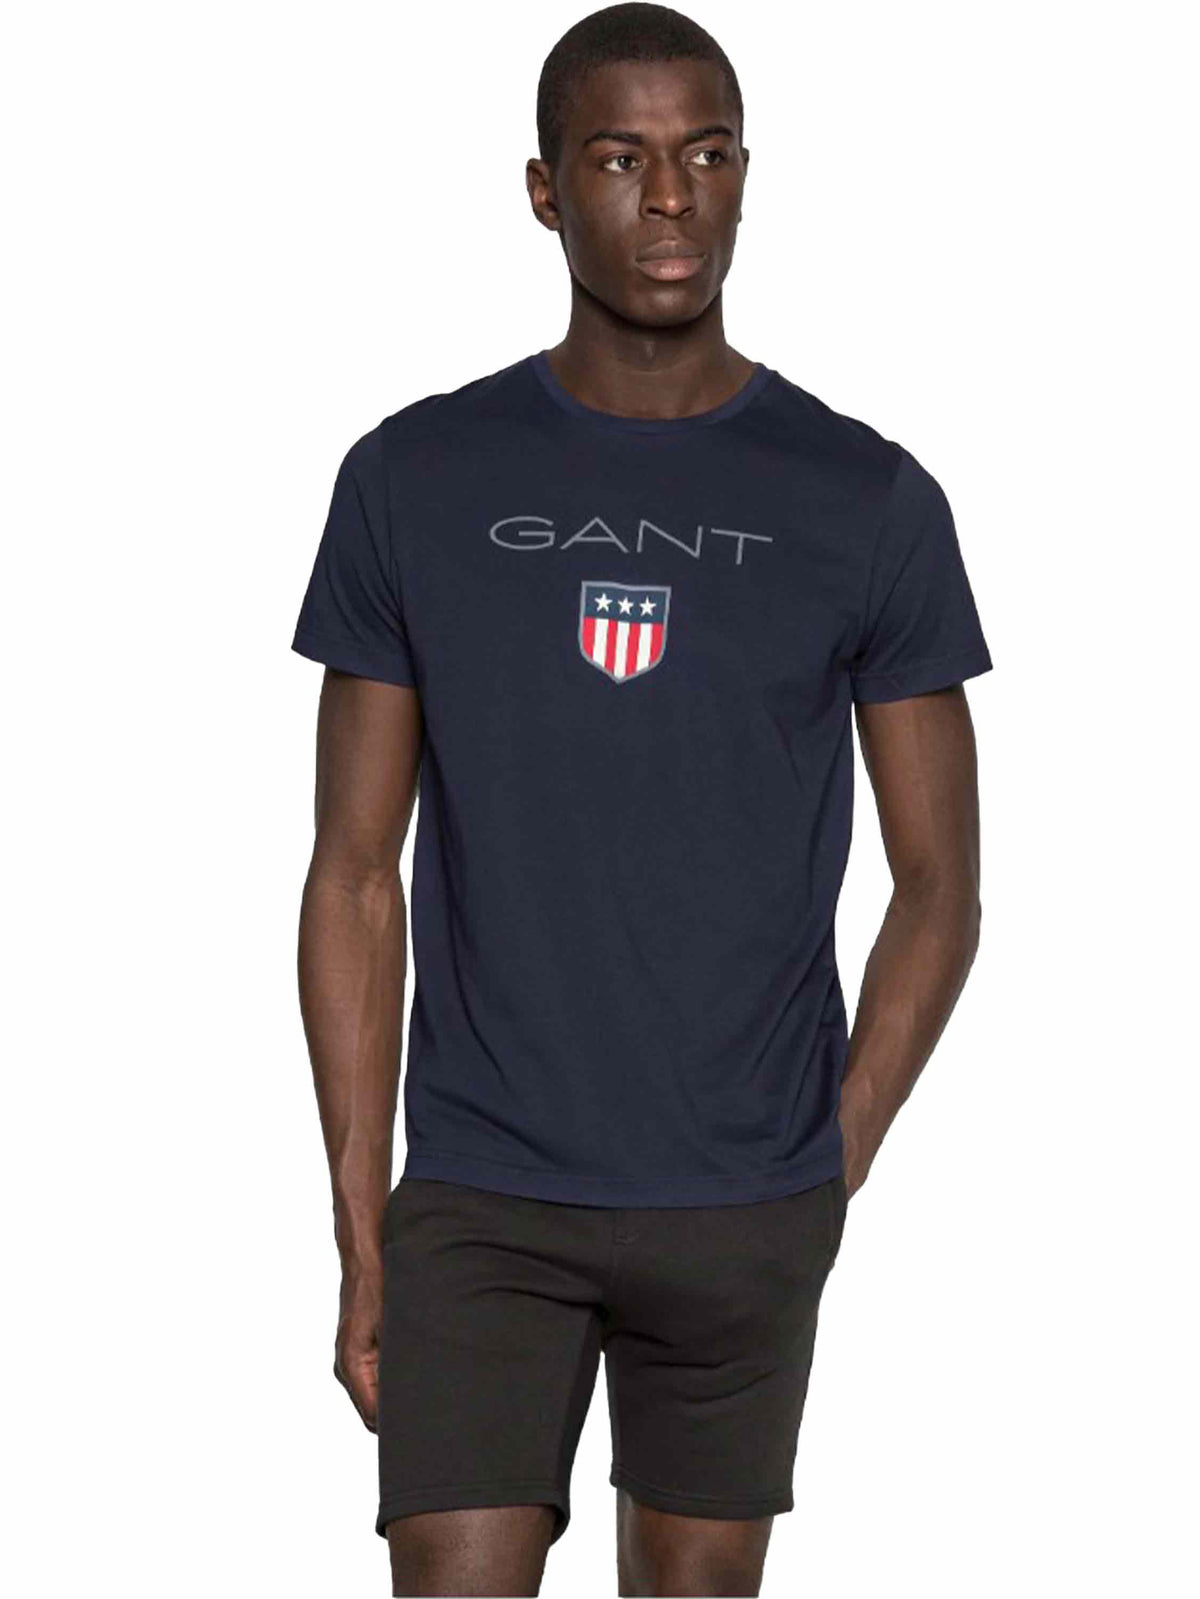 GANT TSHIRTS Gant Big Shield | Mens Crew Neck T-Shirts GANT RAWDENIM